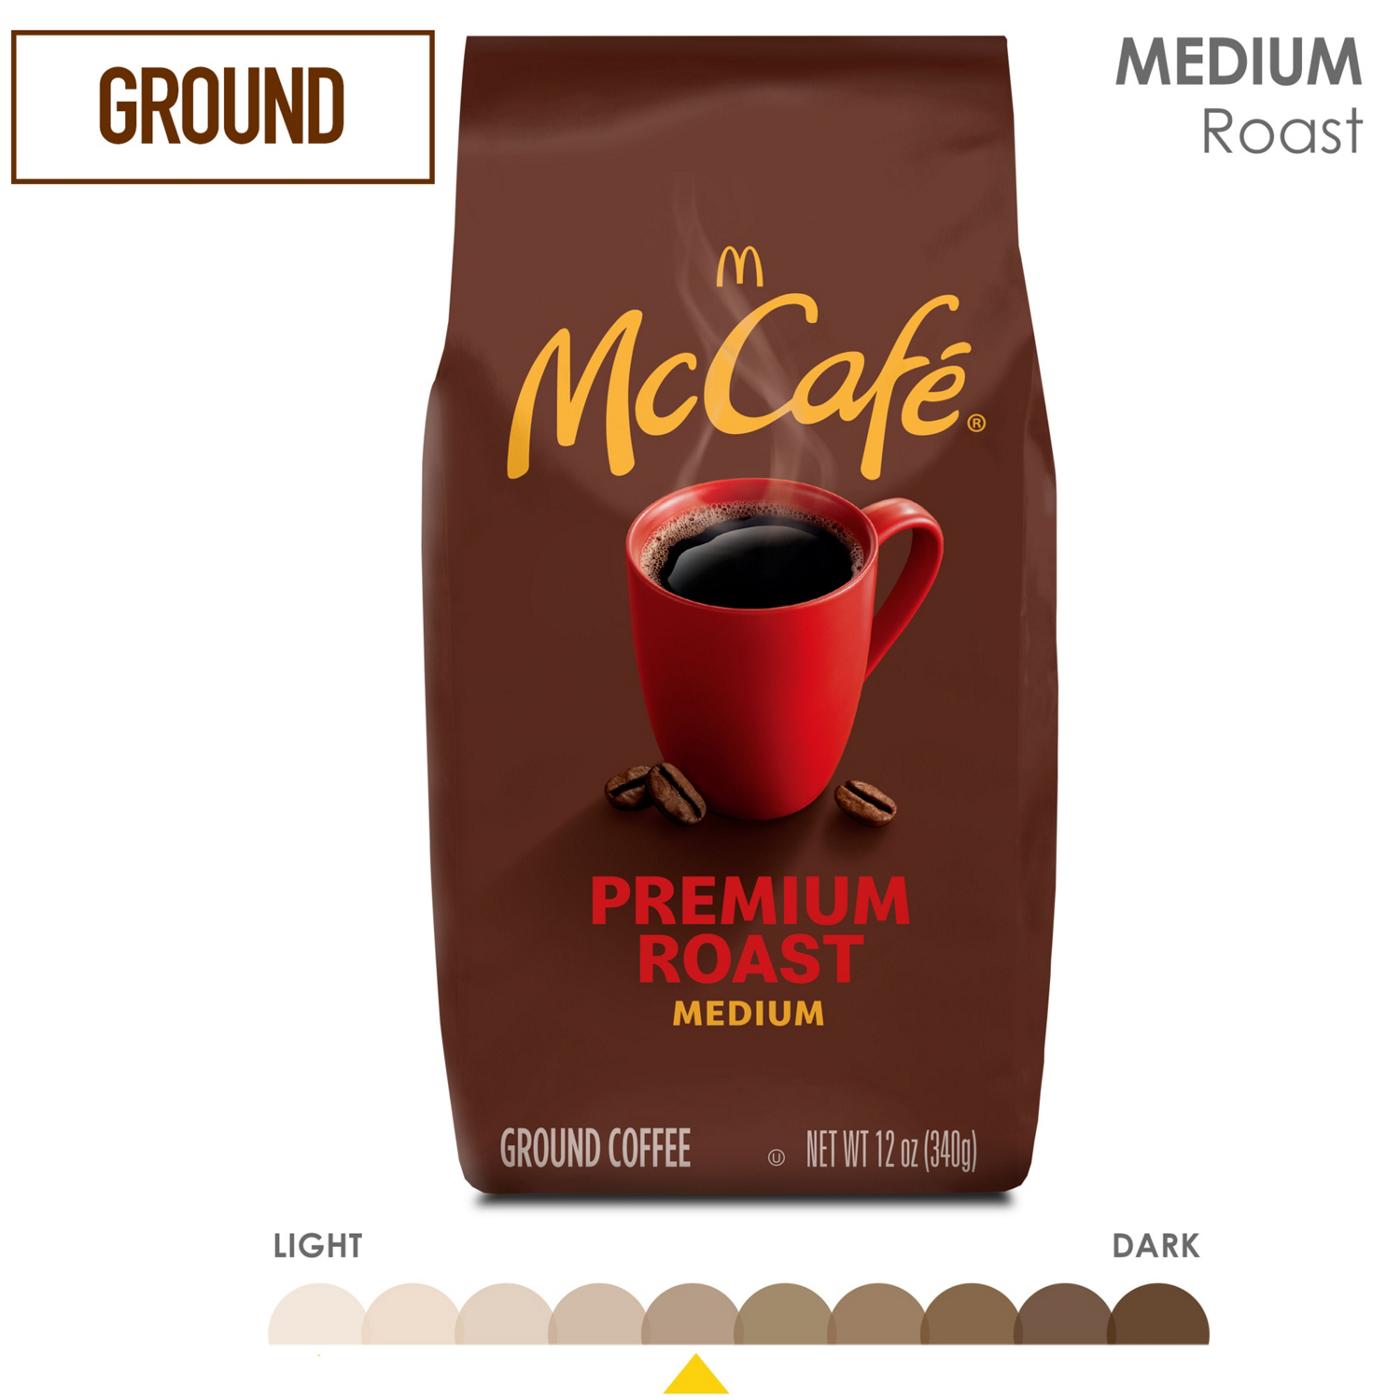 McCafe Premium Roast Medium Ground Coffee; image 7 of 7